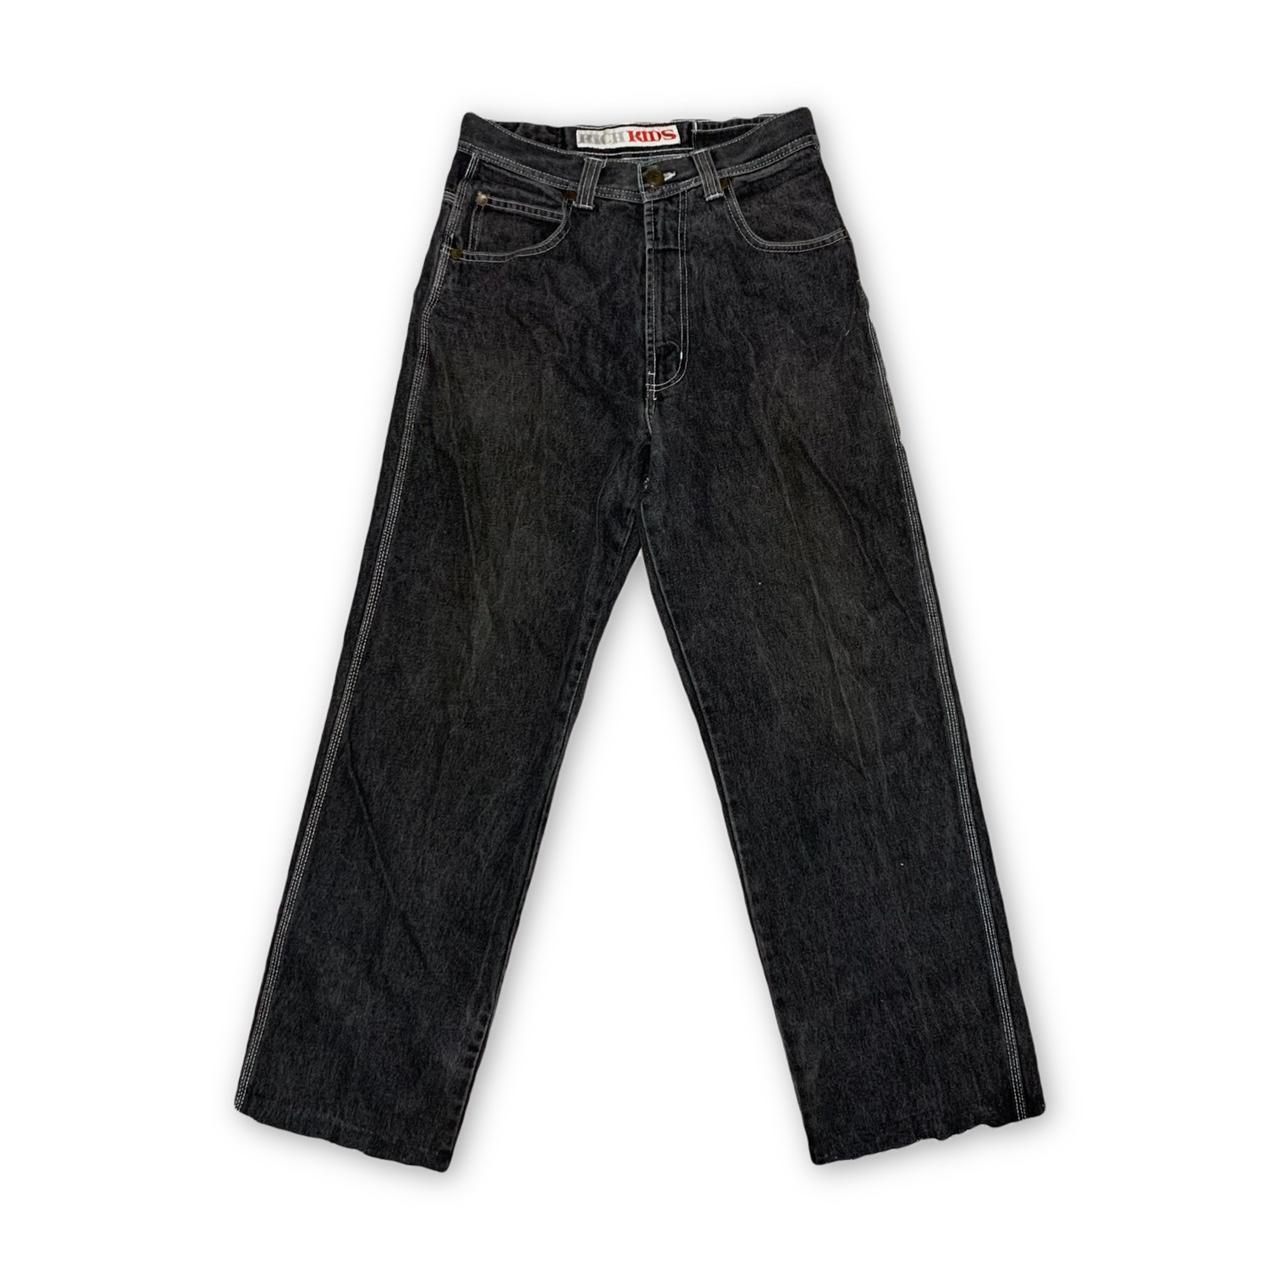 Product Image 1 - Vintage Rich Kids Jeans

- Good